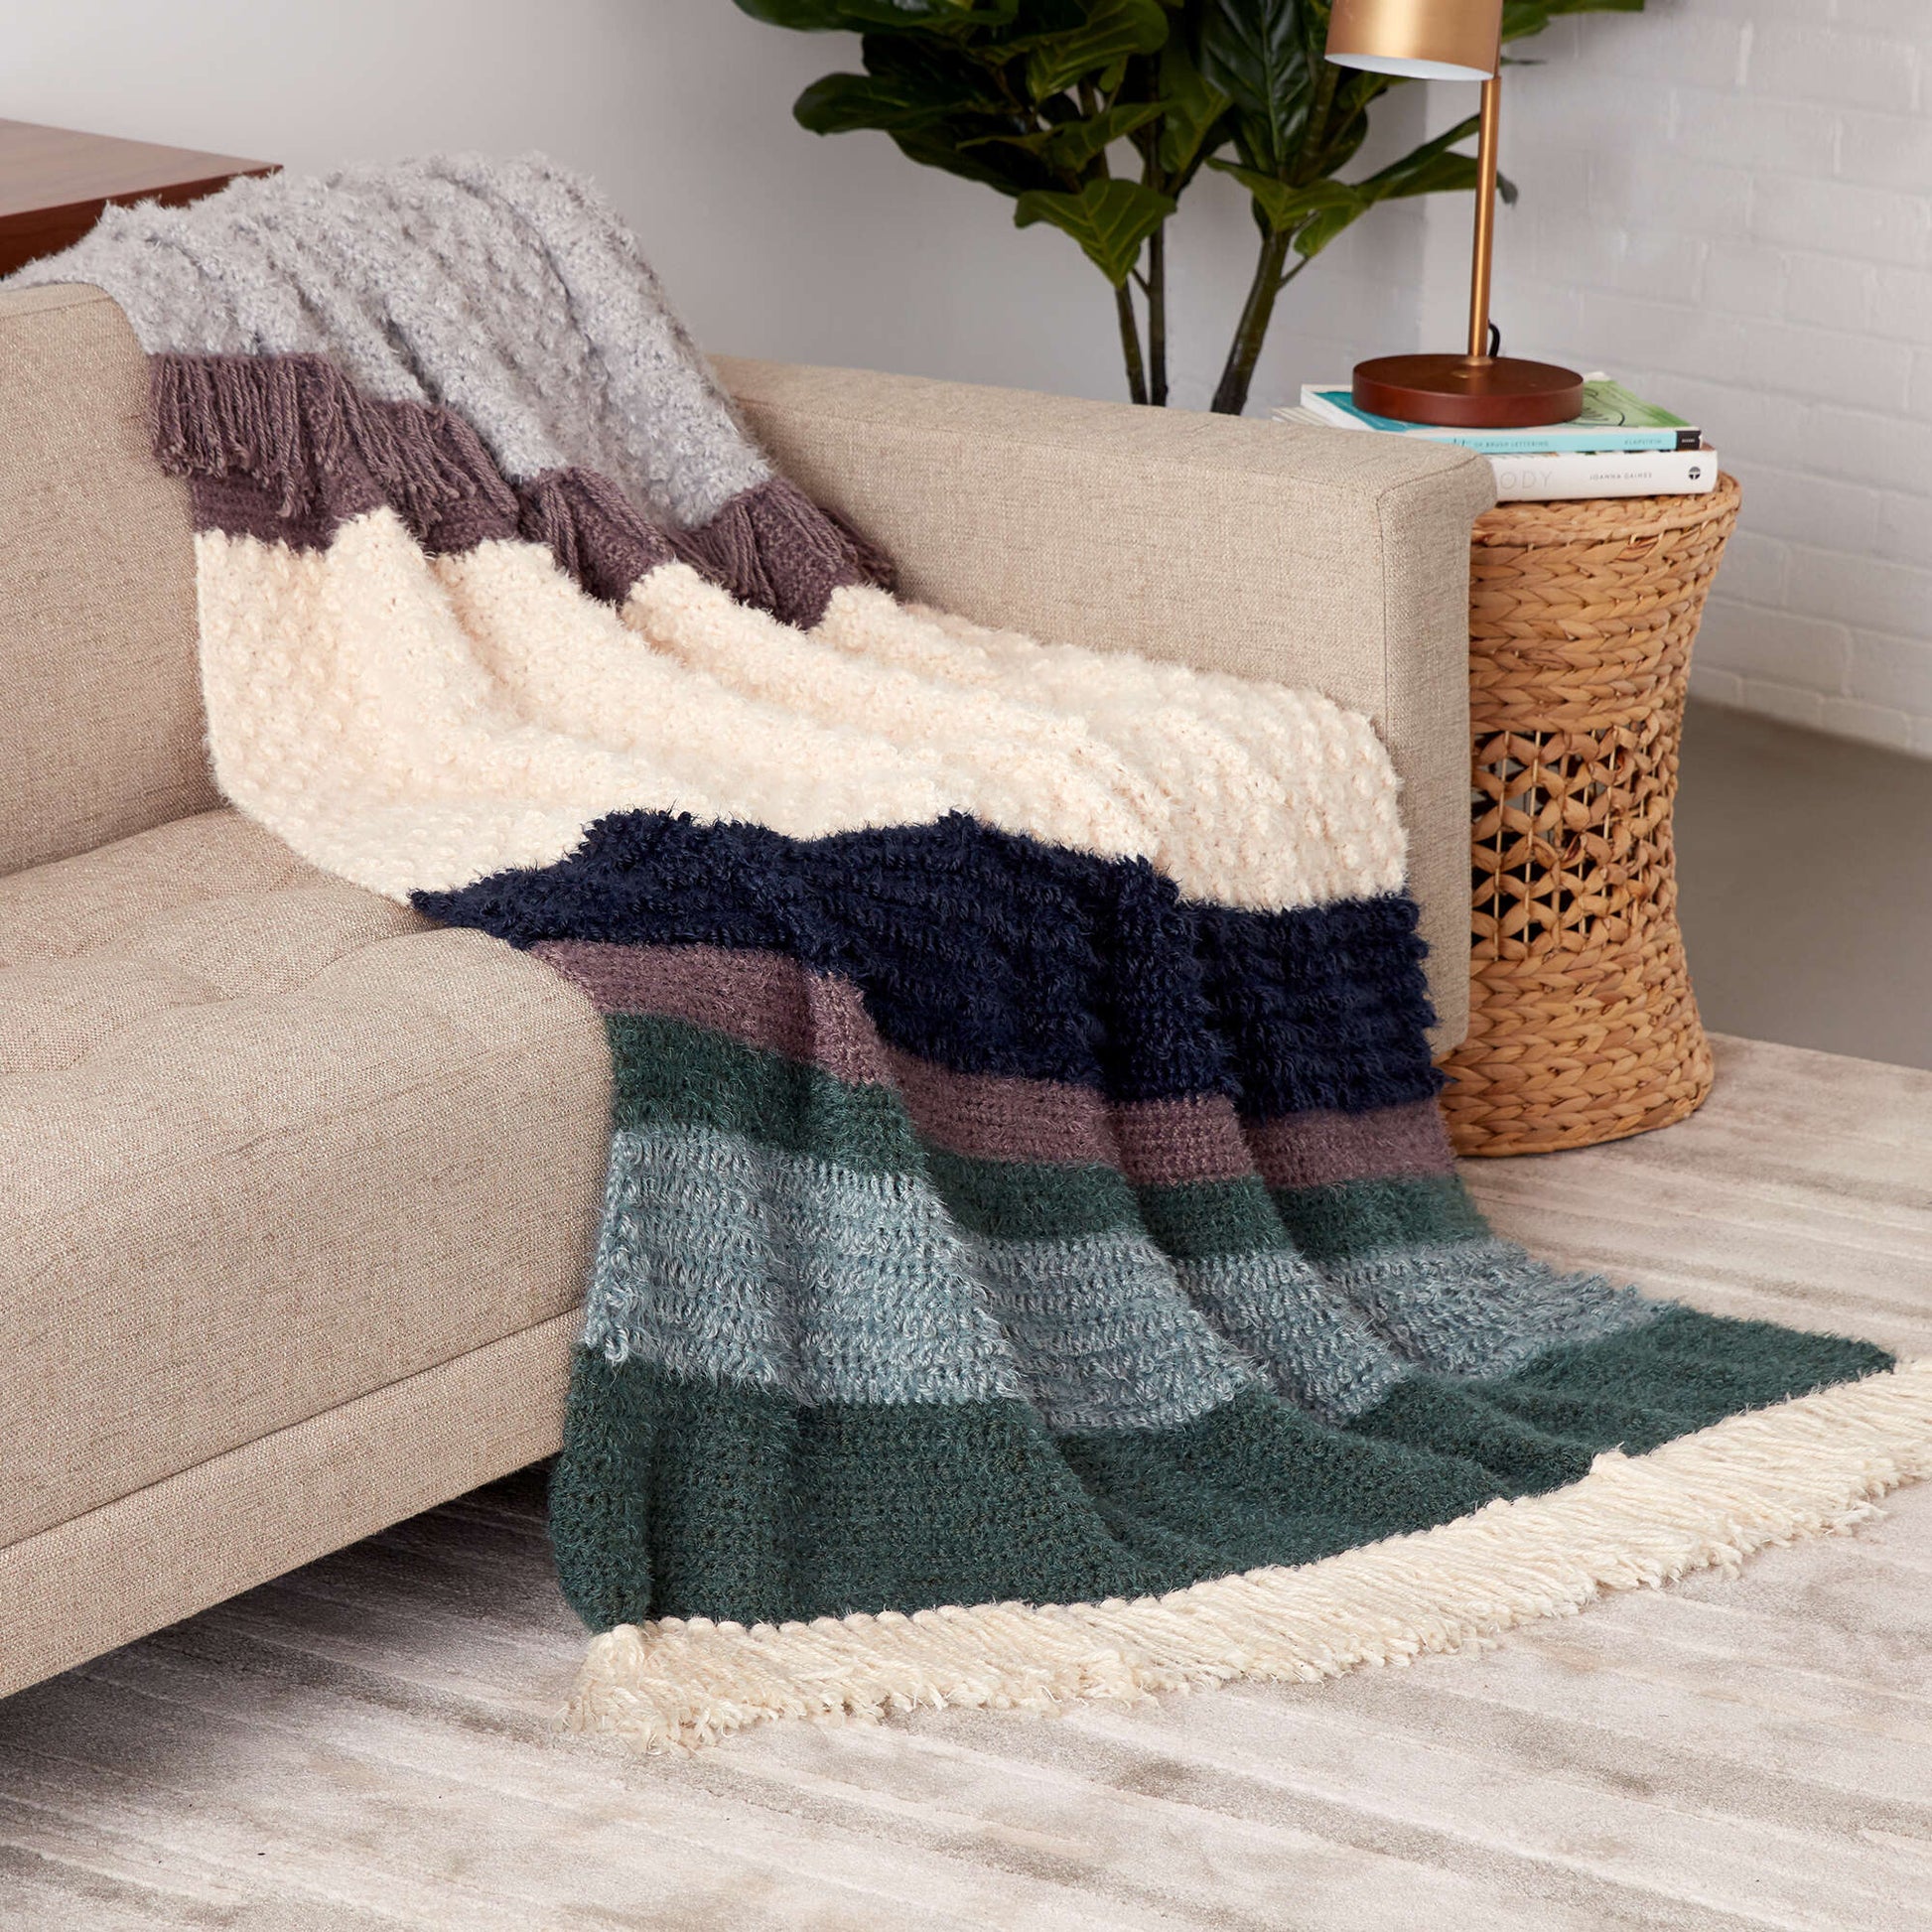 Free Red Heart Cuddle Up Crochet Blanket Pattern